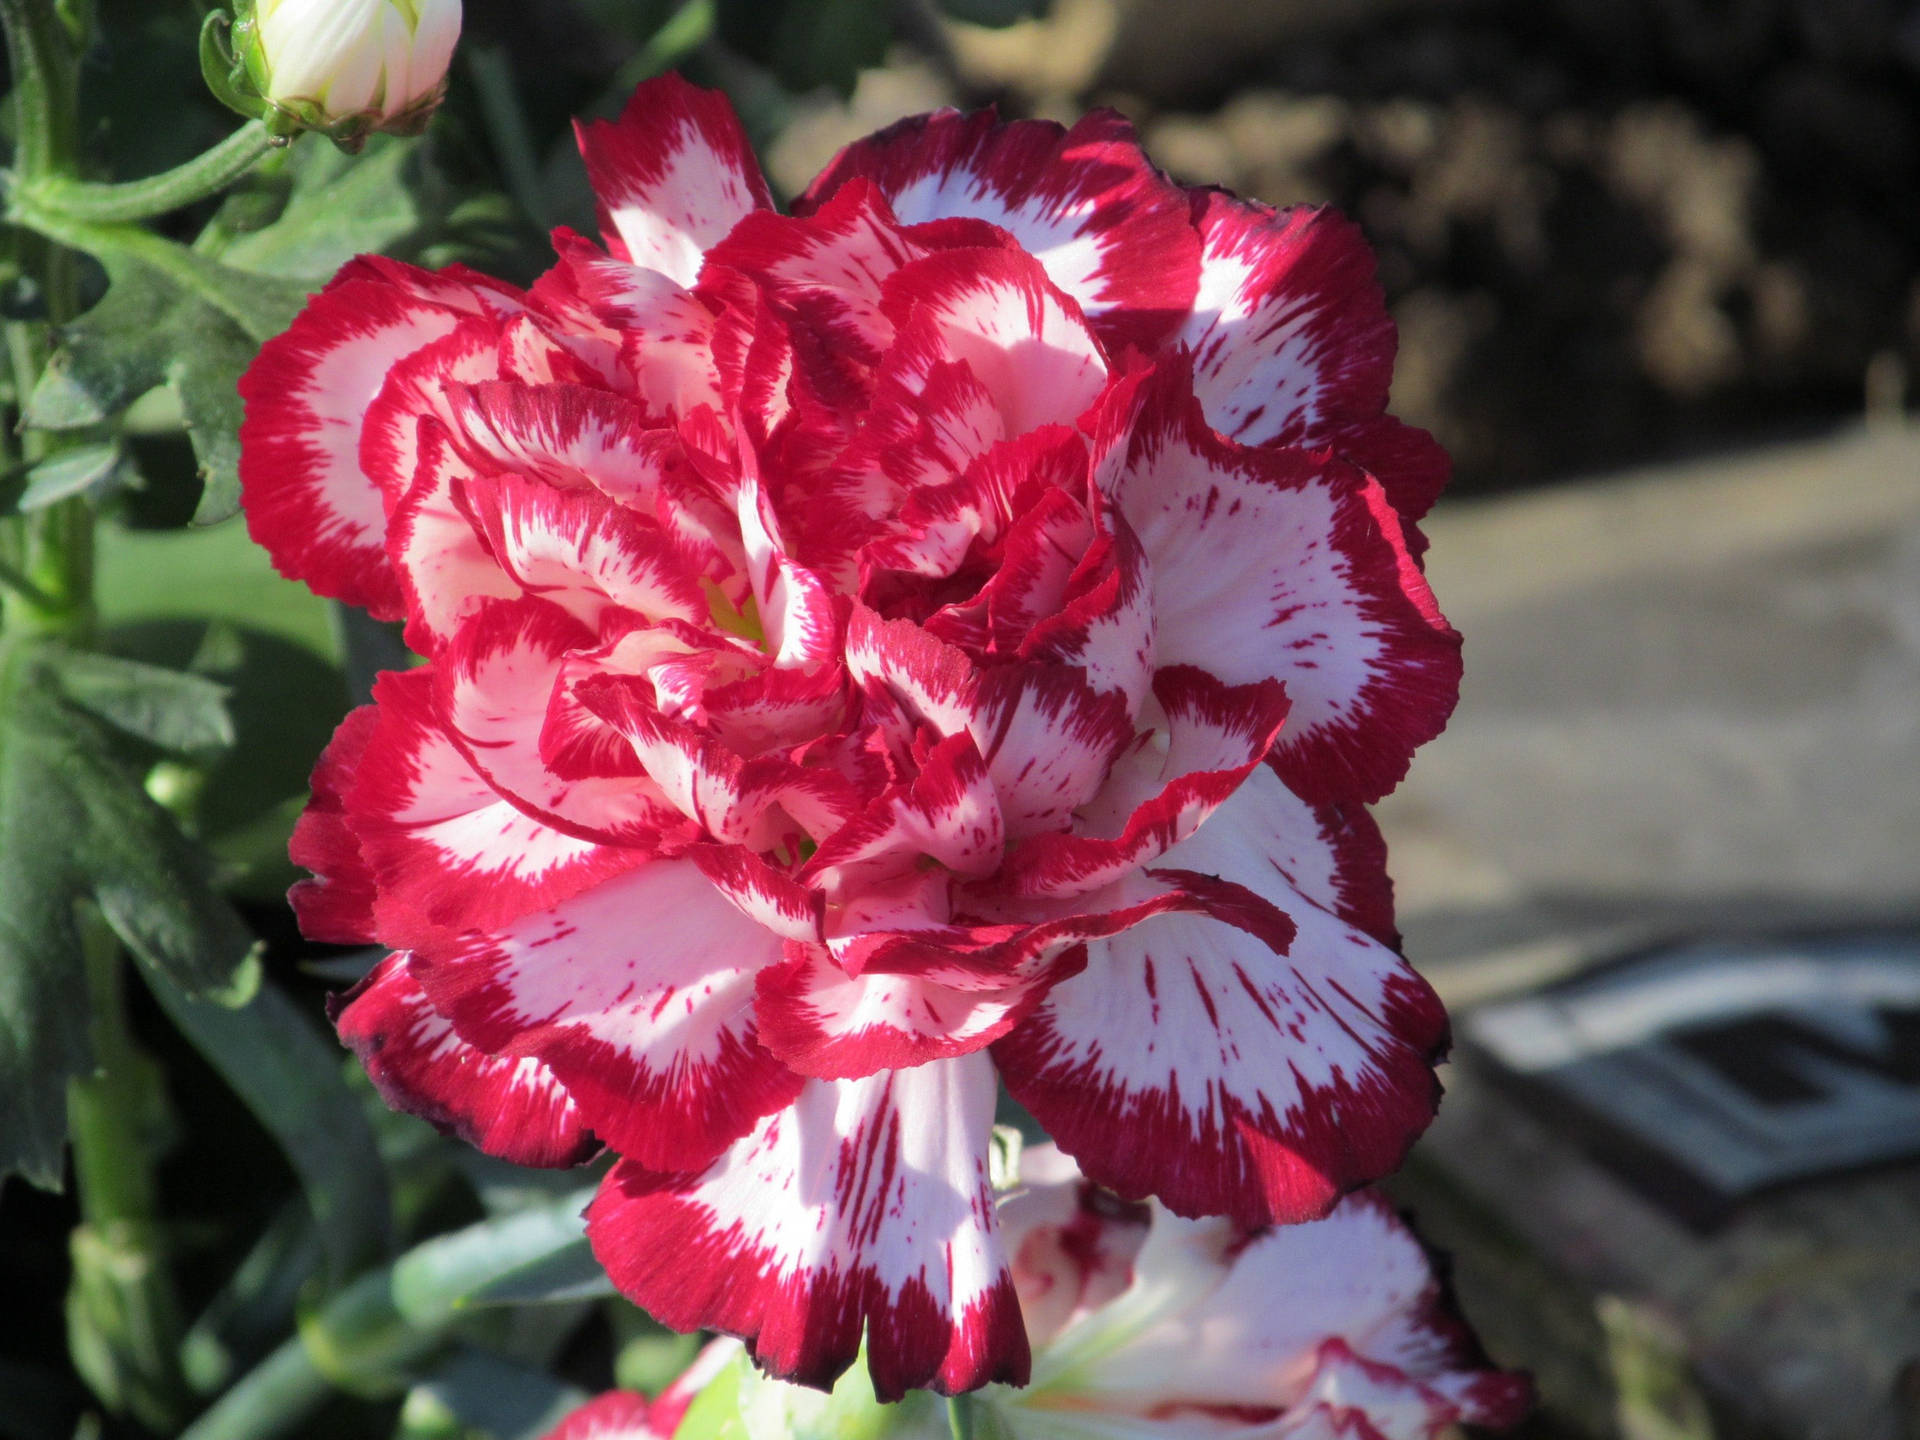 Striking Red and White Carnation Flower Wallpaper